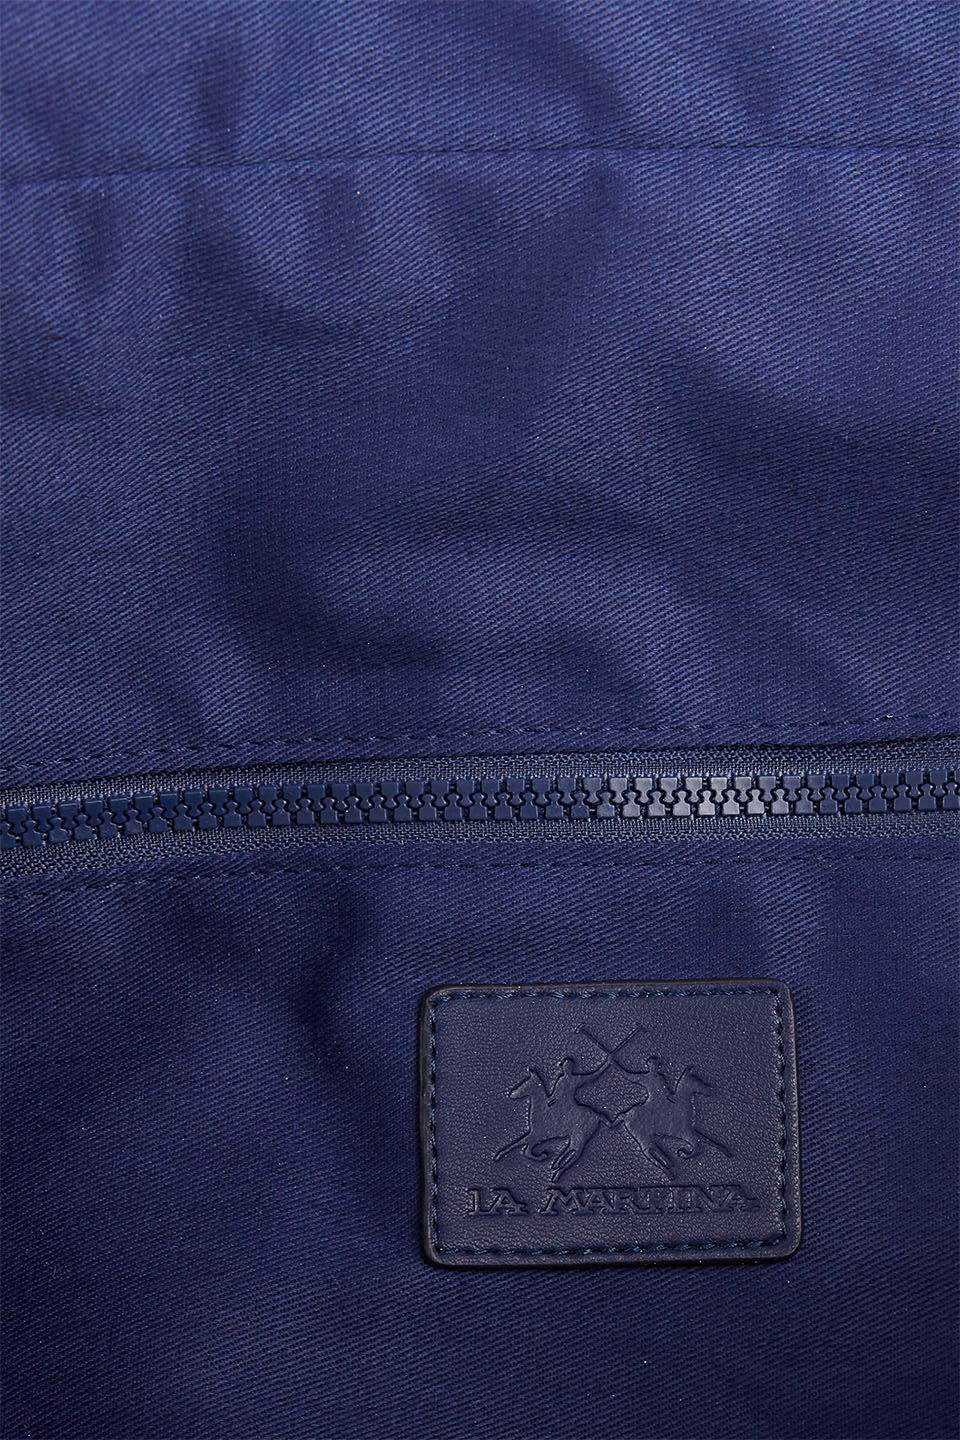 PU leather duffel bag - La Martina - Official Online Shop